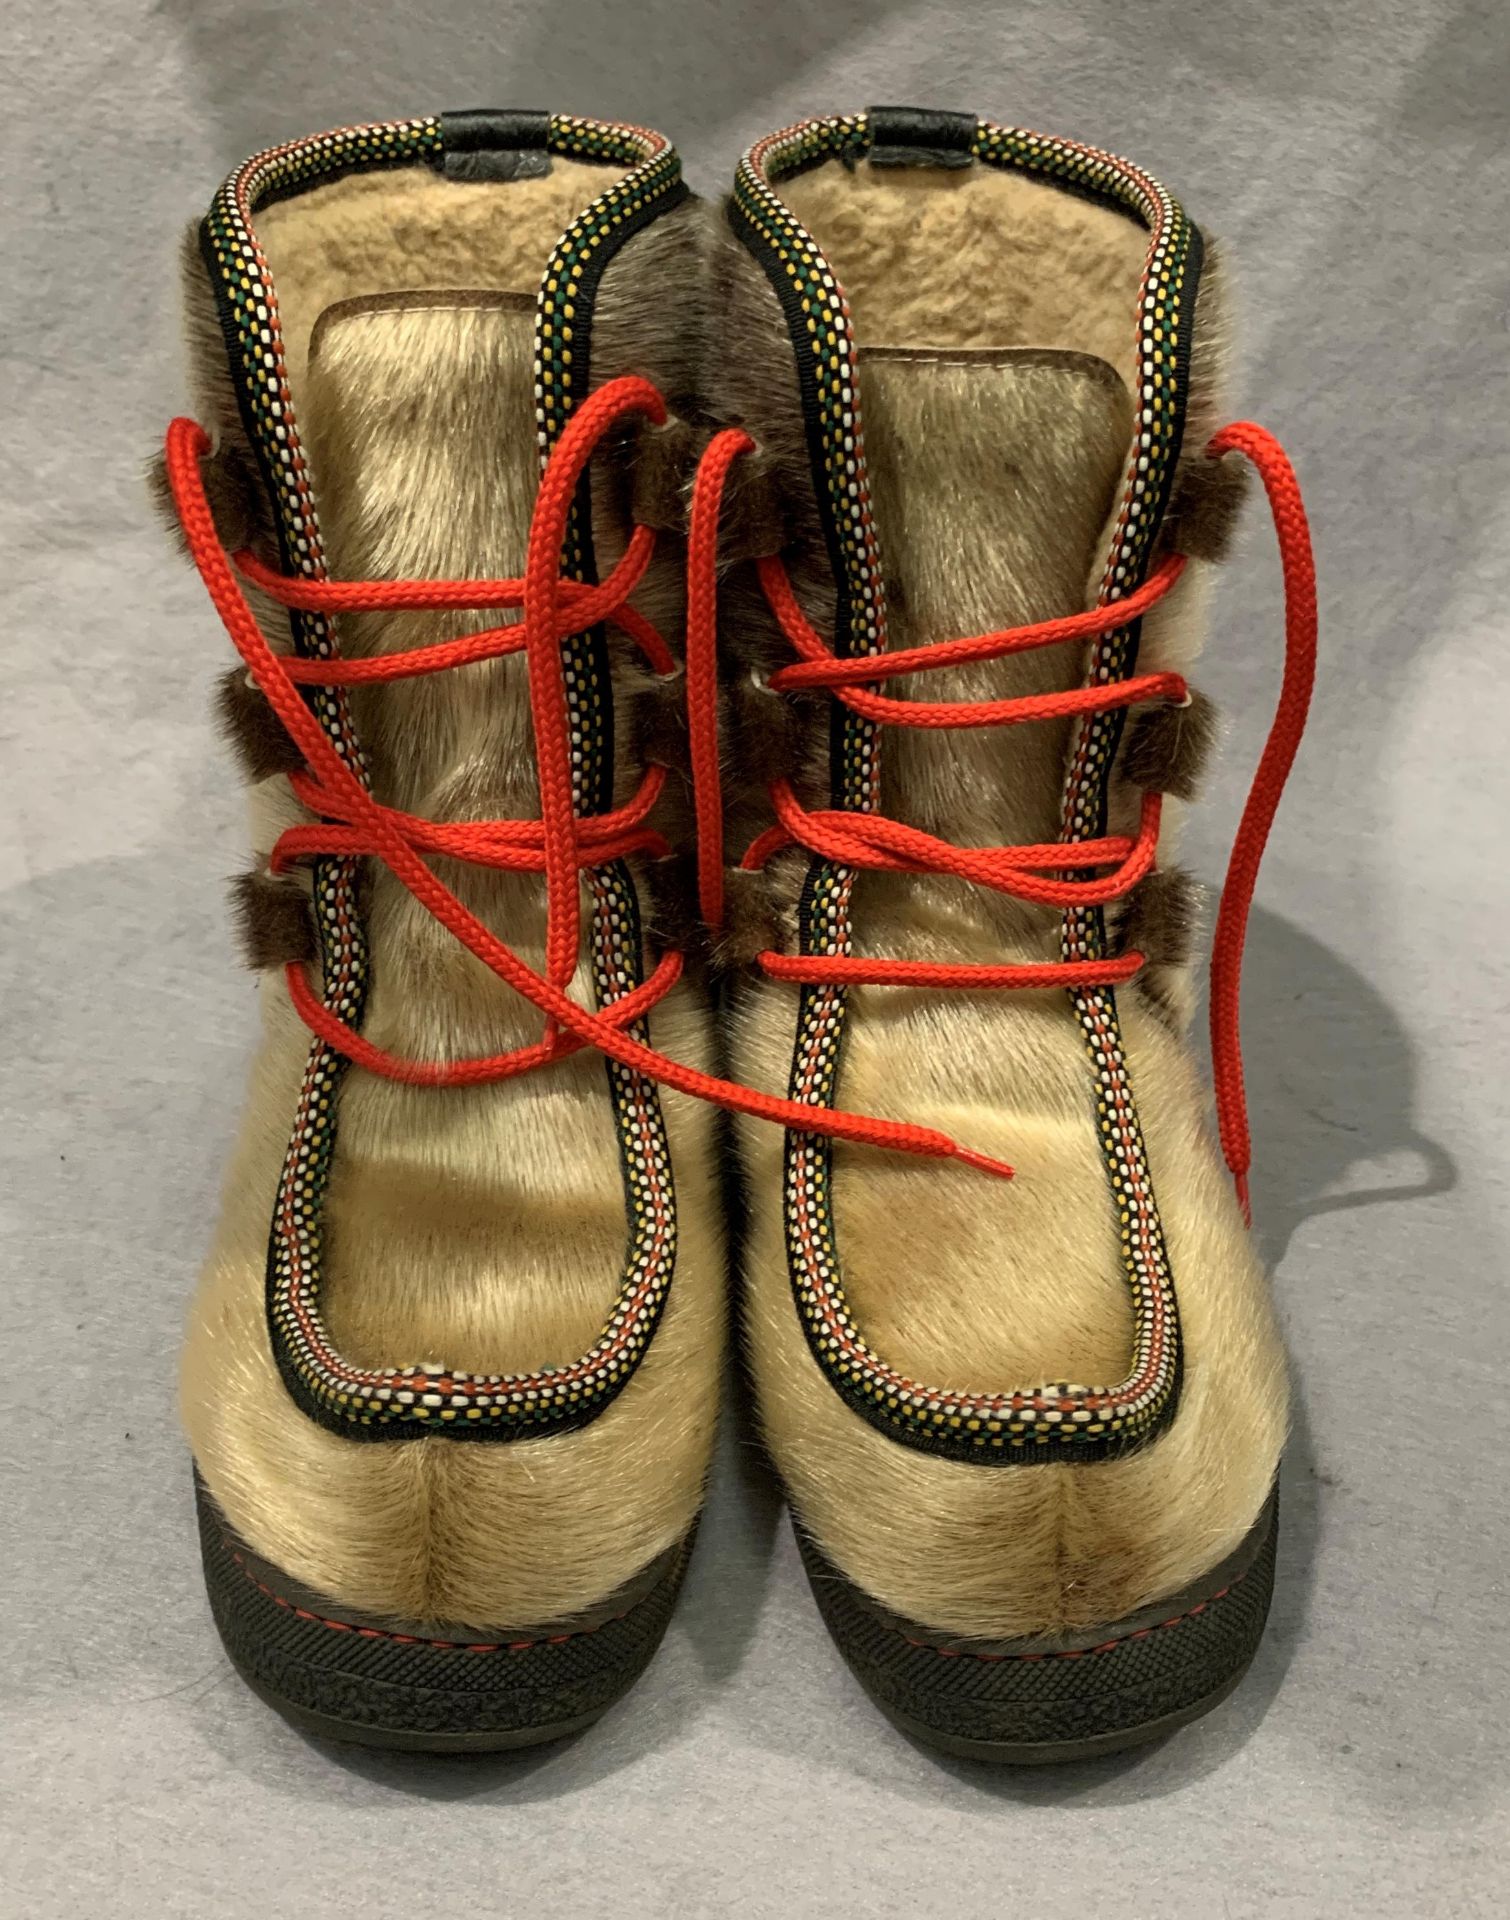 Topaz reindeer/eskimo style boots, - Image 2 of 2